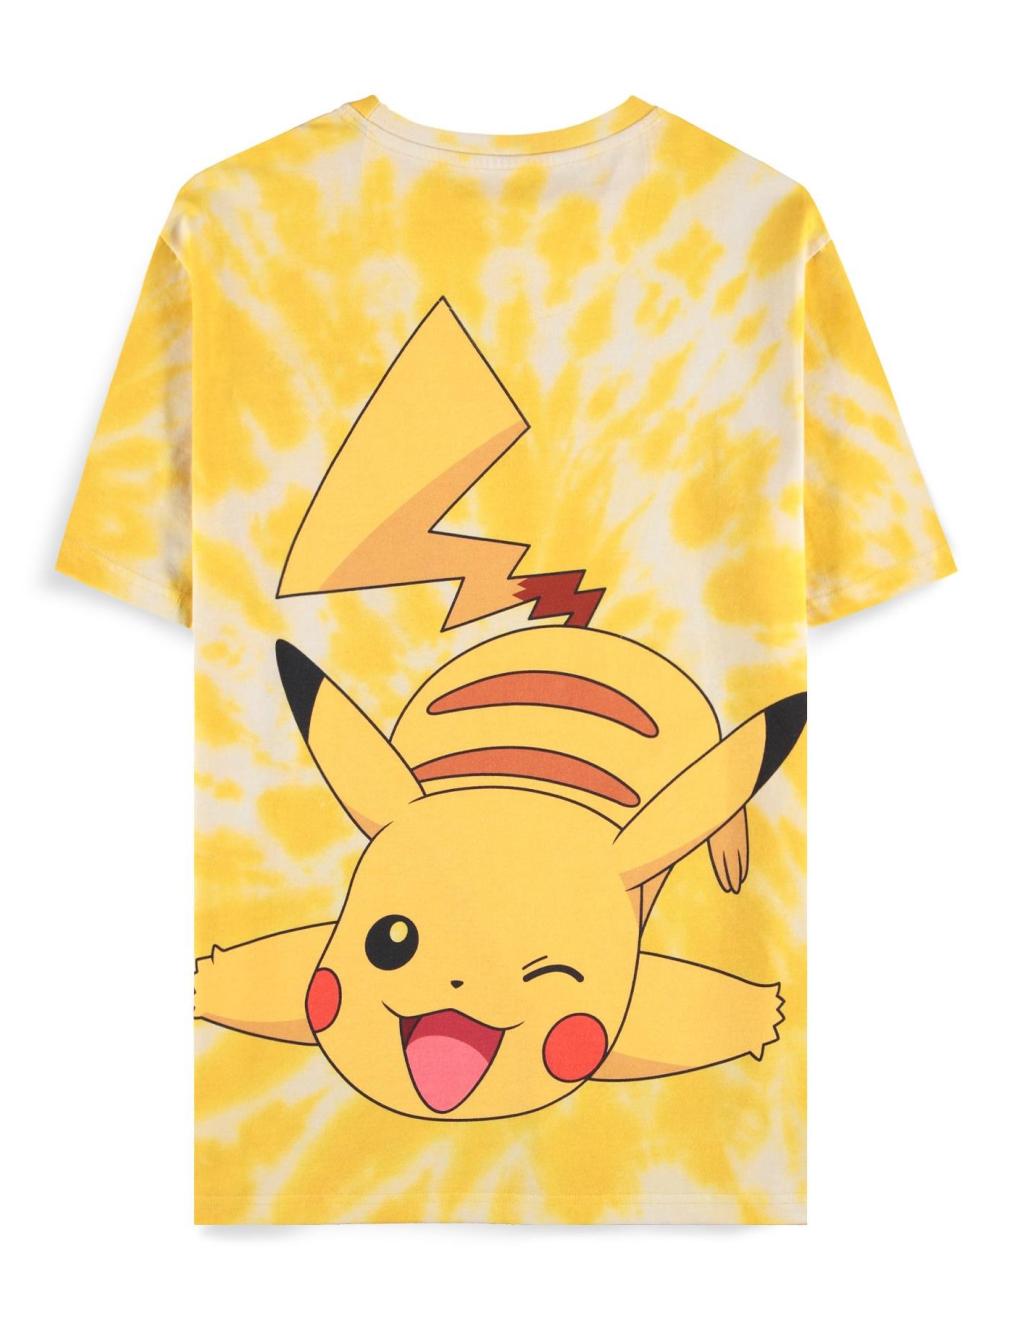 POKEMON - Ash and Pikachu - Men's T-shirt (M)